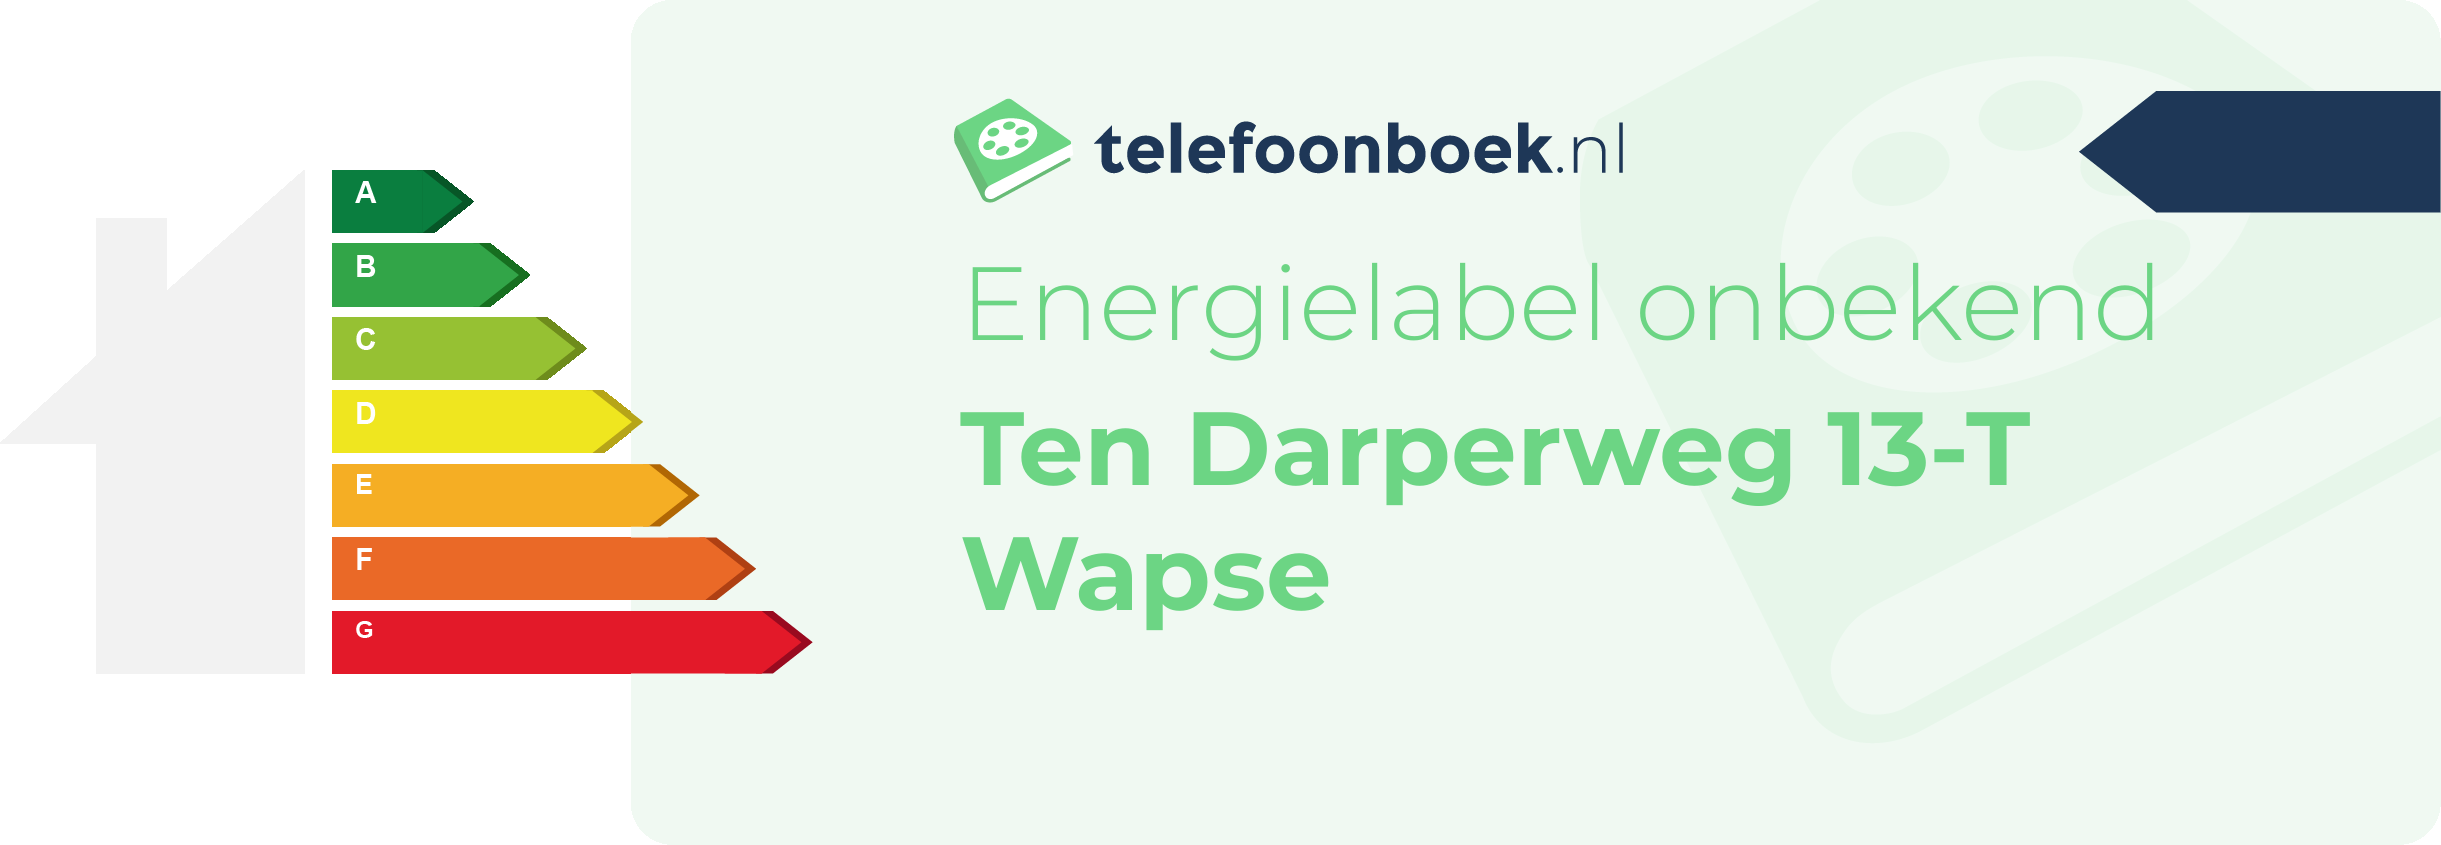 Energielabel Ten Darperweg 13-T Wapse